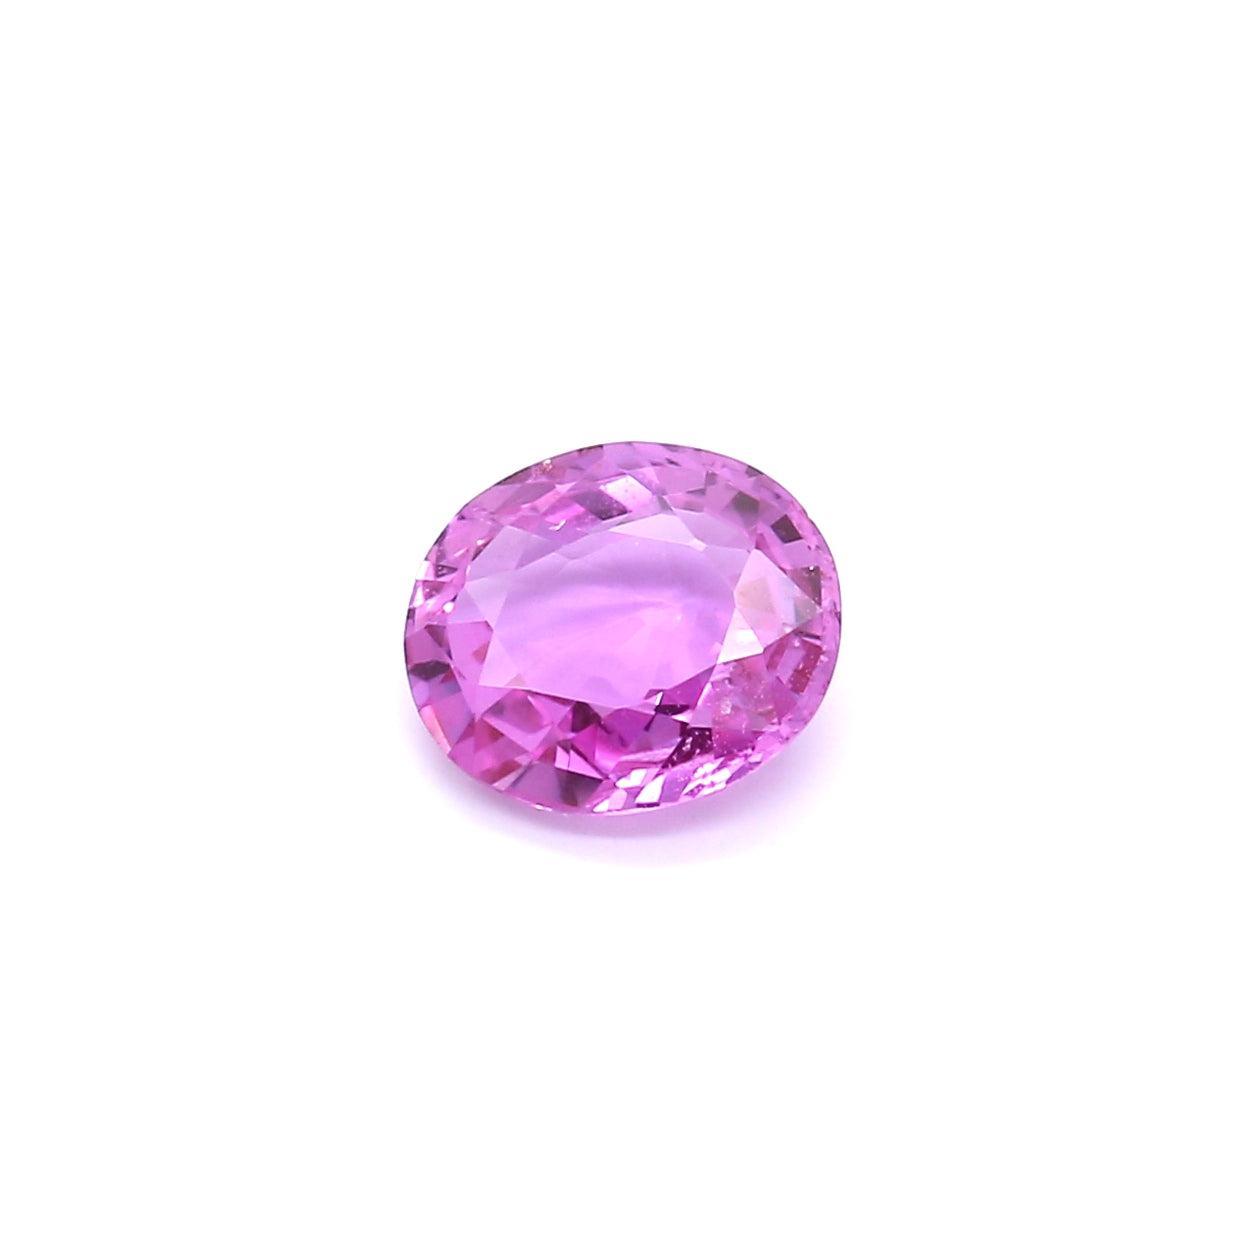 1.52ct Purplish Pink, Oval Sapphire, Heated, Madagascar - 7.77 x 6.85 x 3.22mm